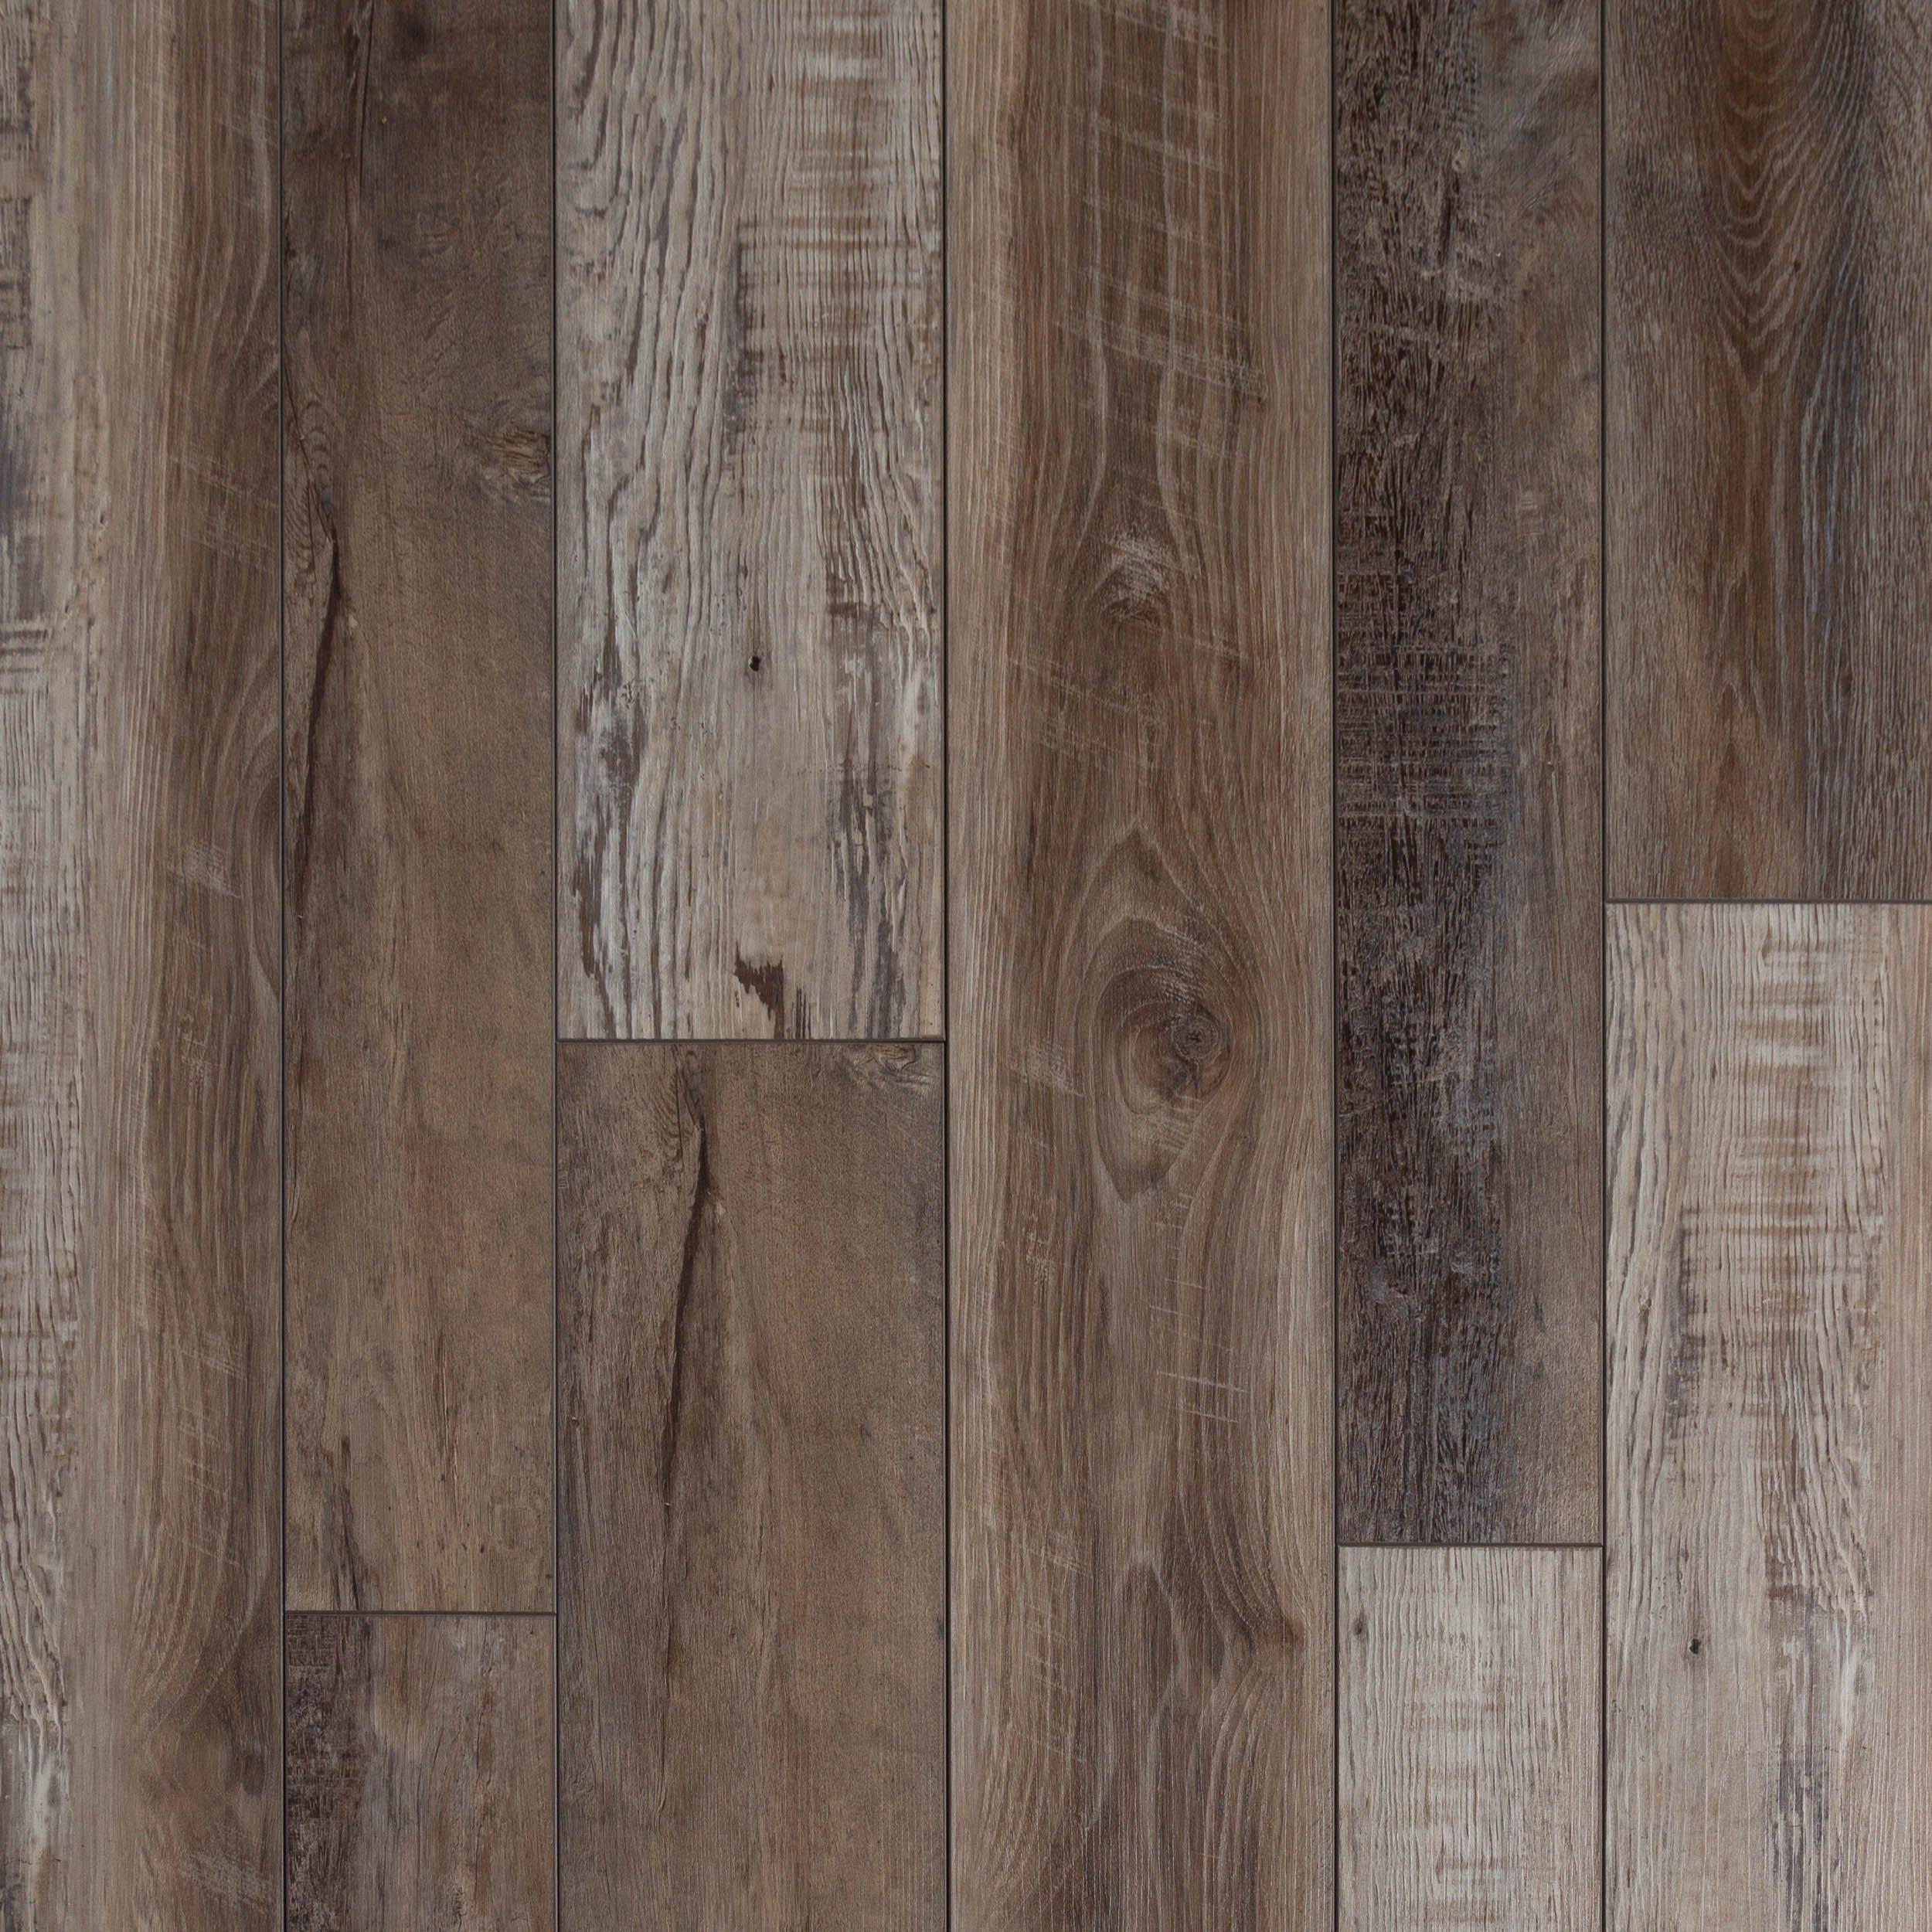 Cortado Oak Rigid Core Luxury Vinyl, How To Cut Vinyl Plank Flooring With Cork Backing